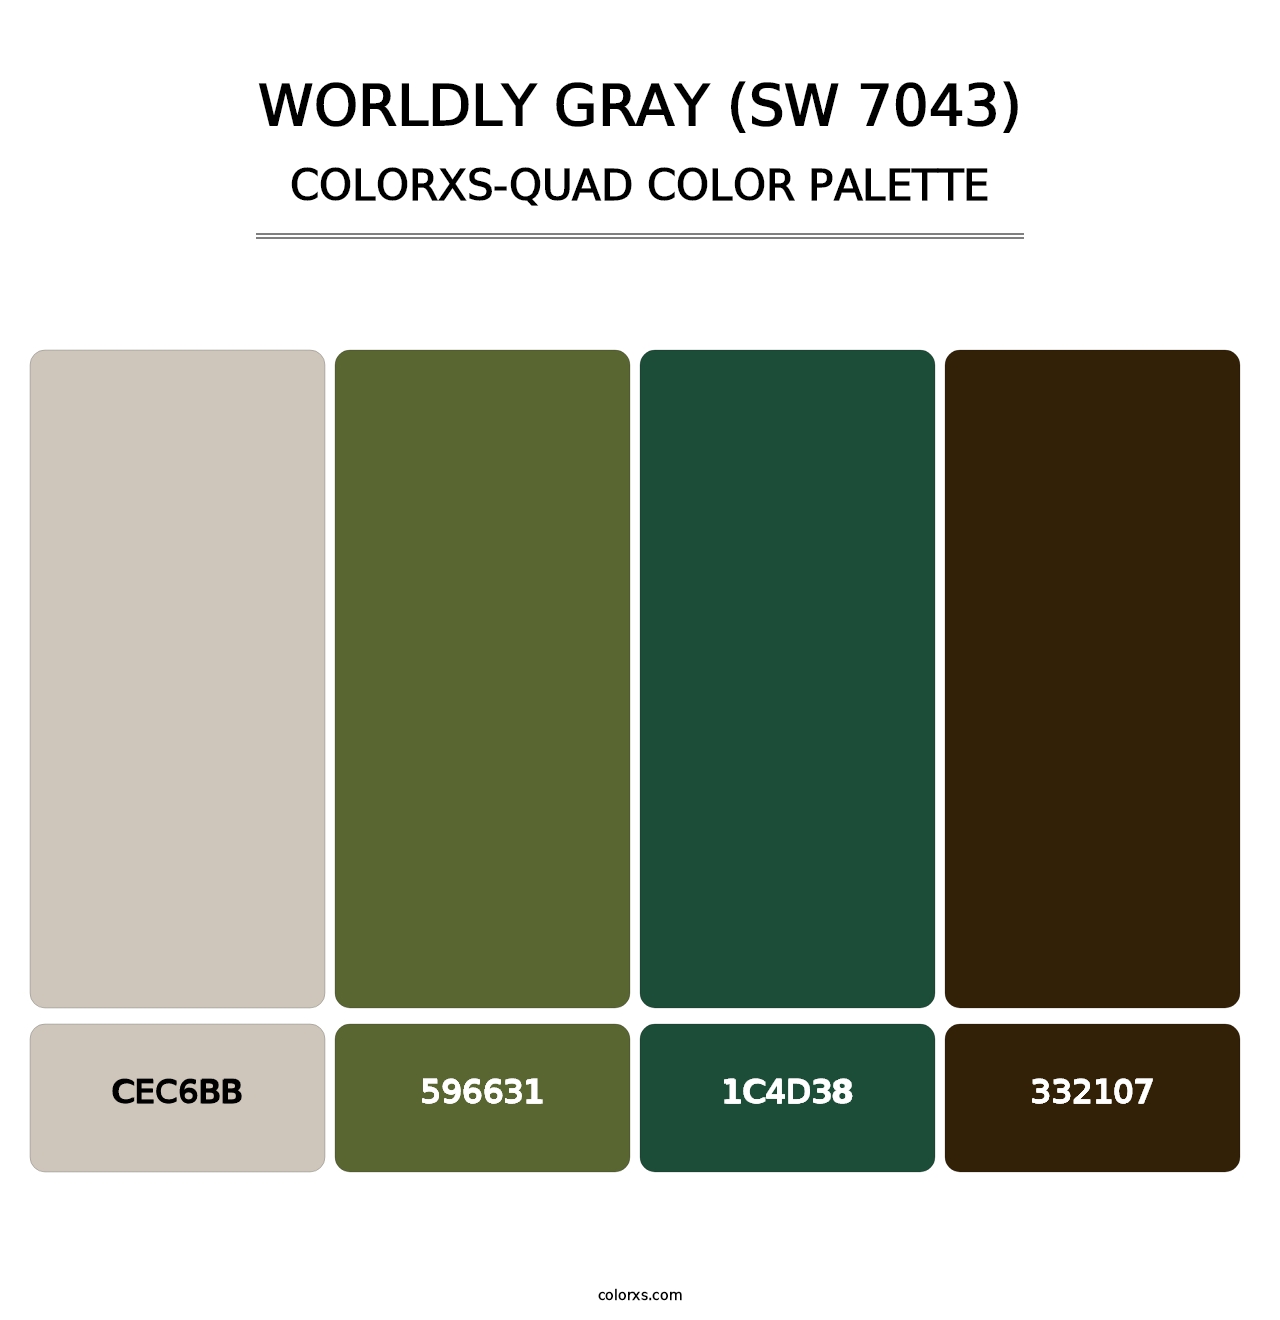 Worldly Gray (SW 7043) - Colorxs Quad Palette